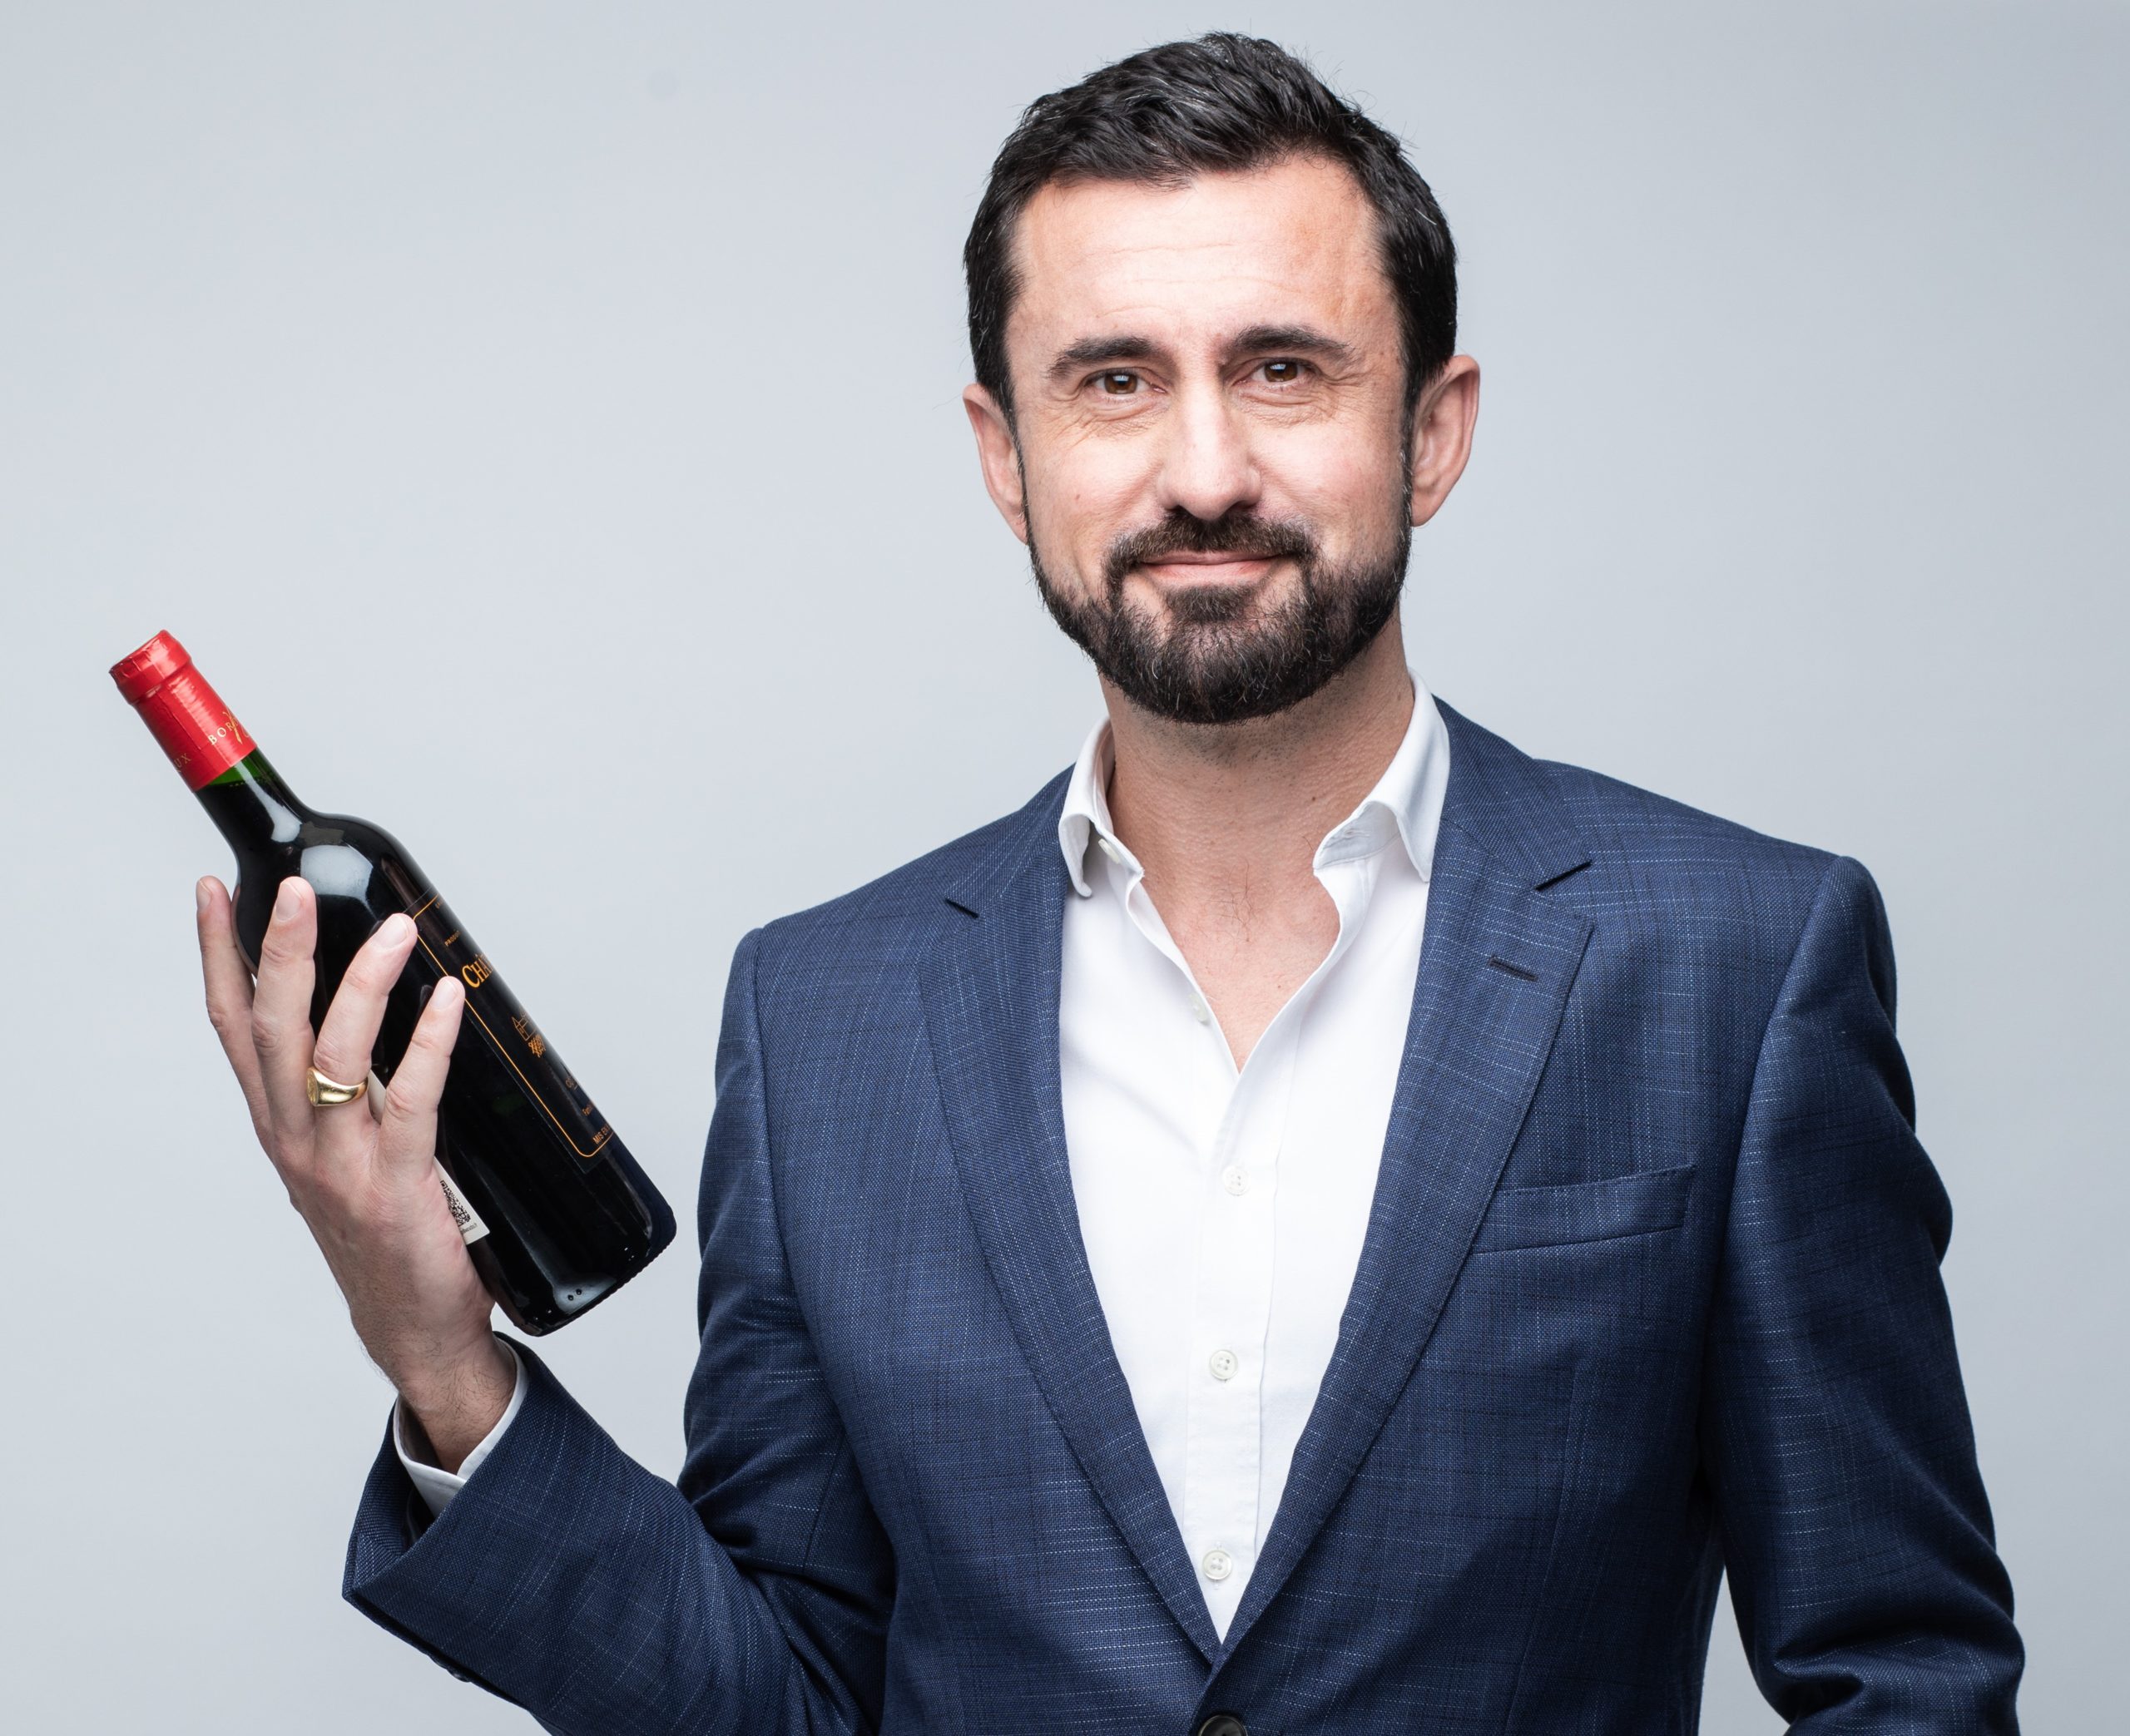 Bordeaux: A New Ambassador for the Great Wine Capitals